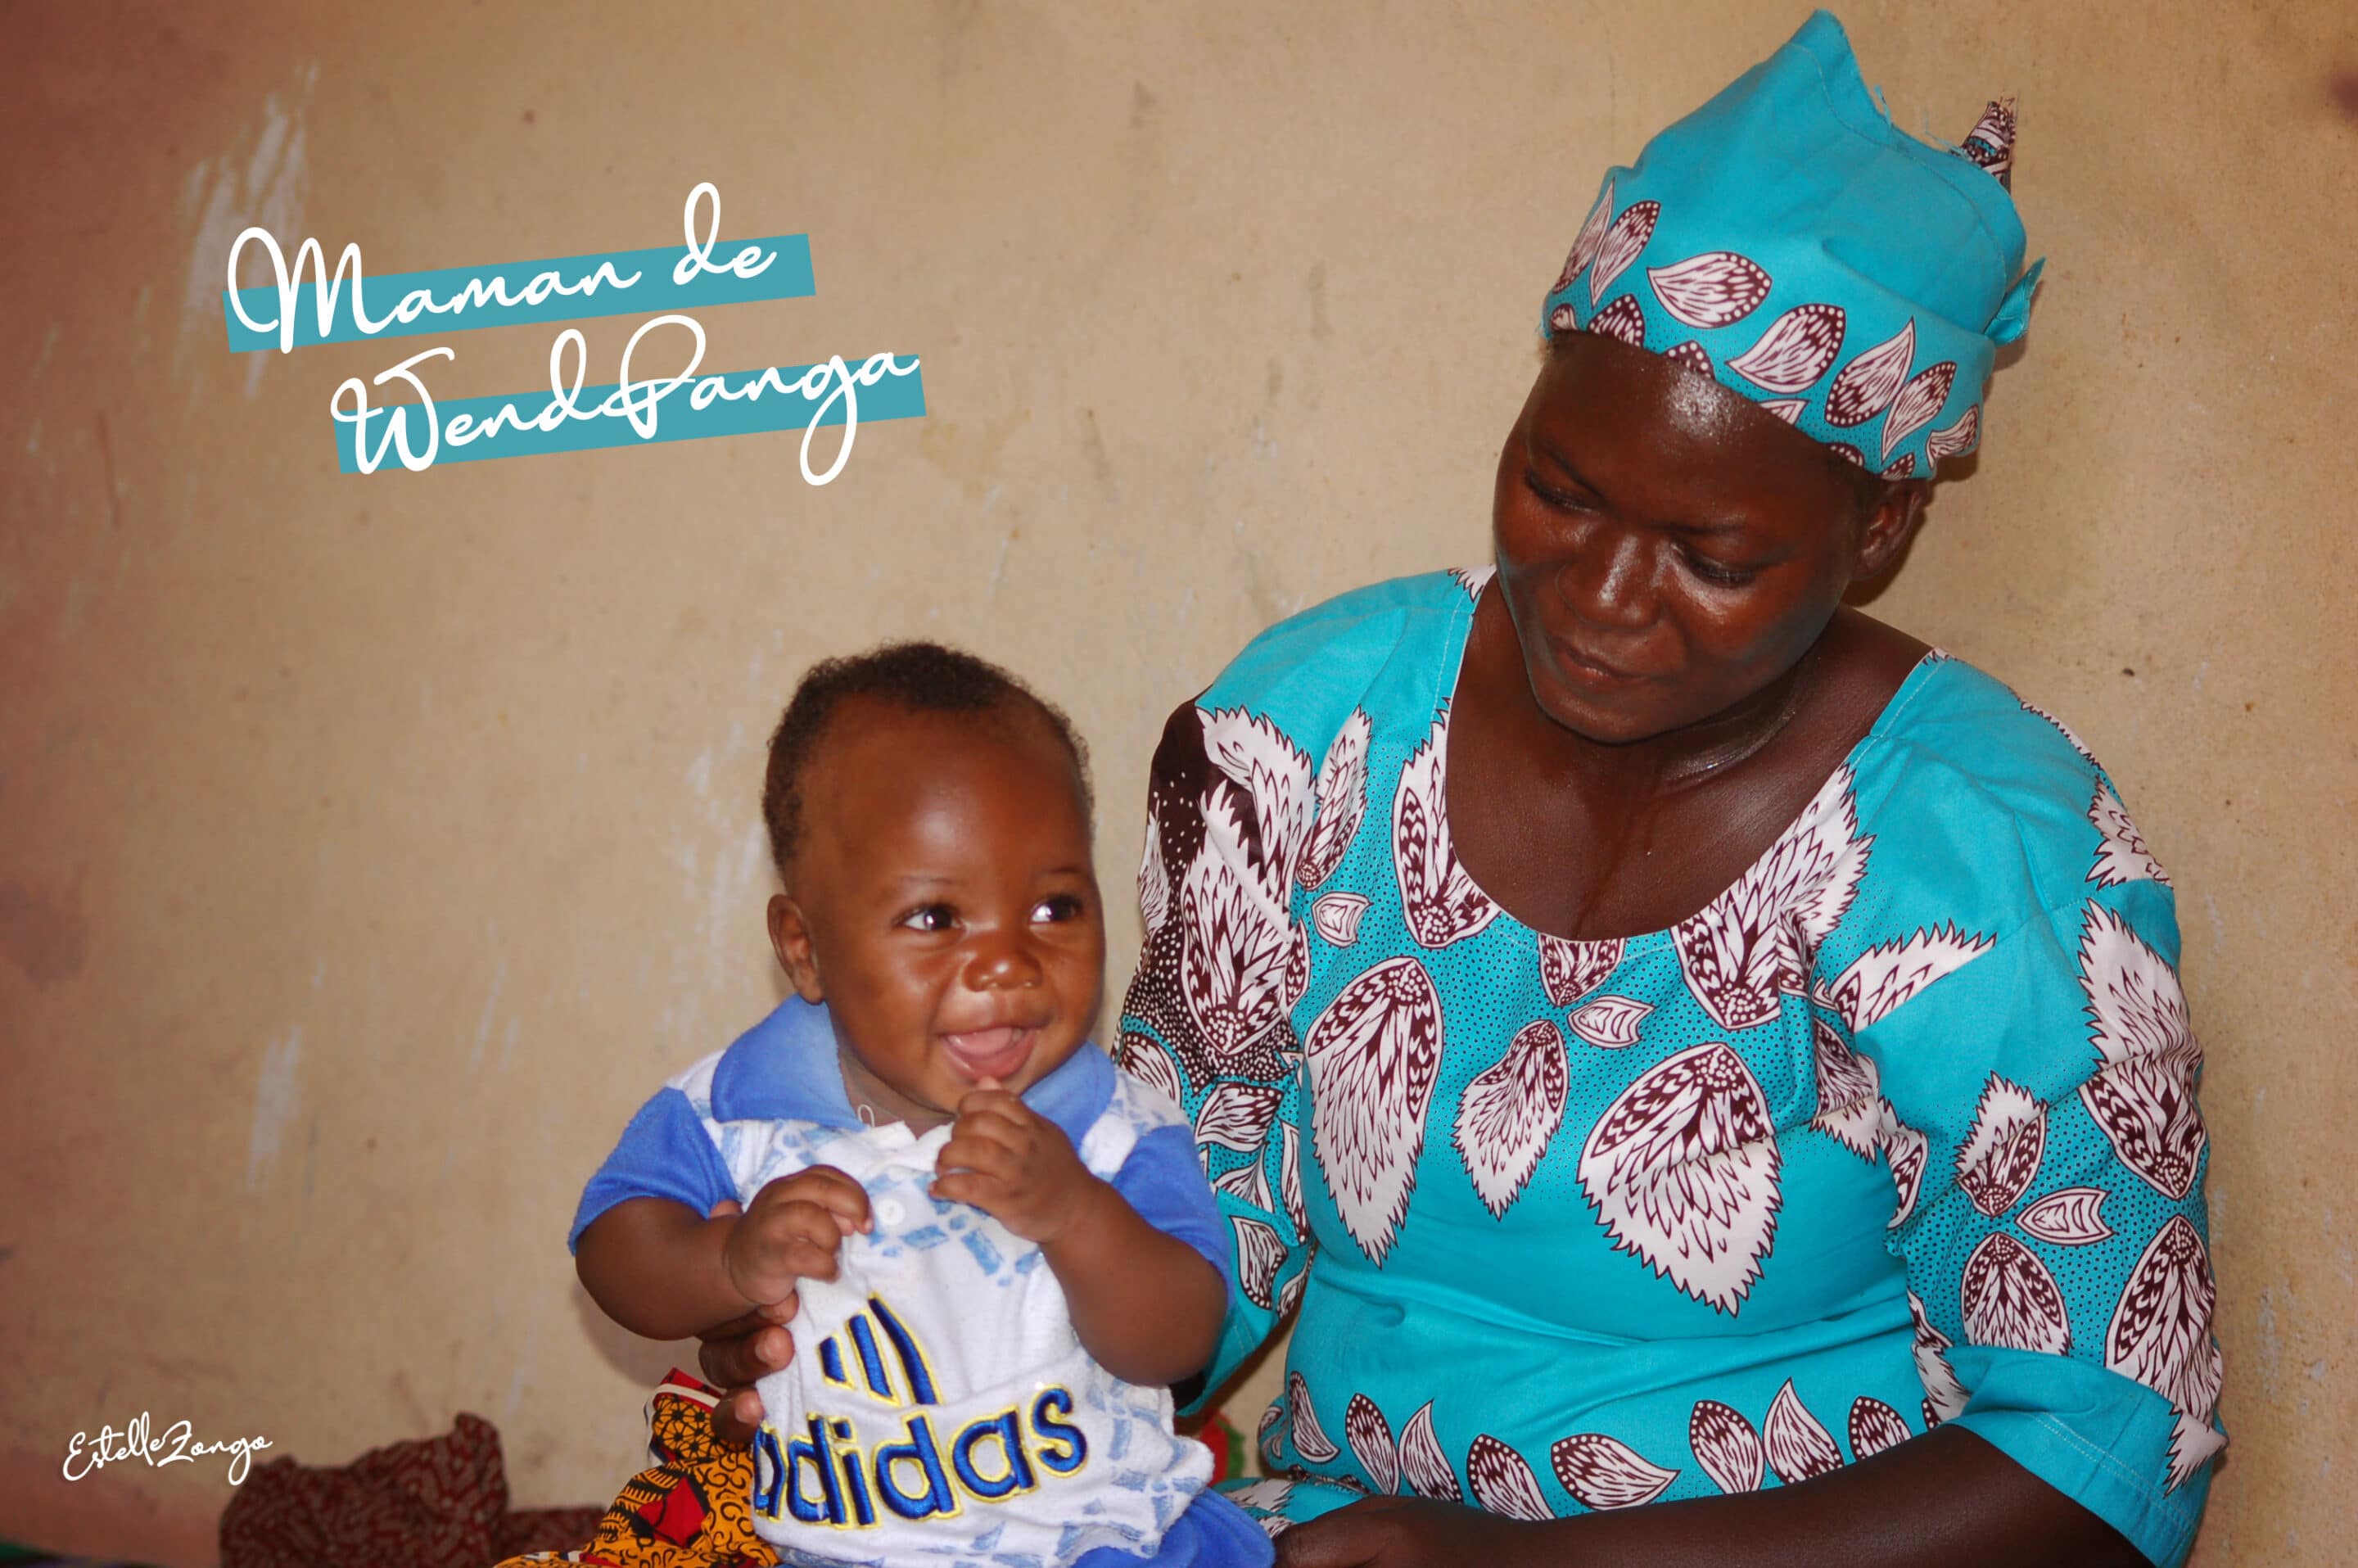 Sabine, maternal assistant in Burkina Faso